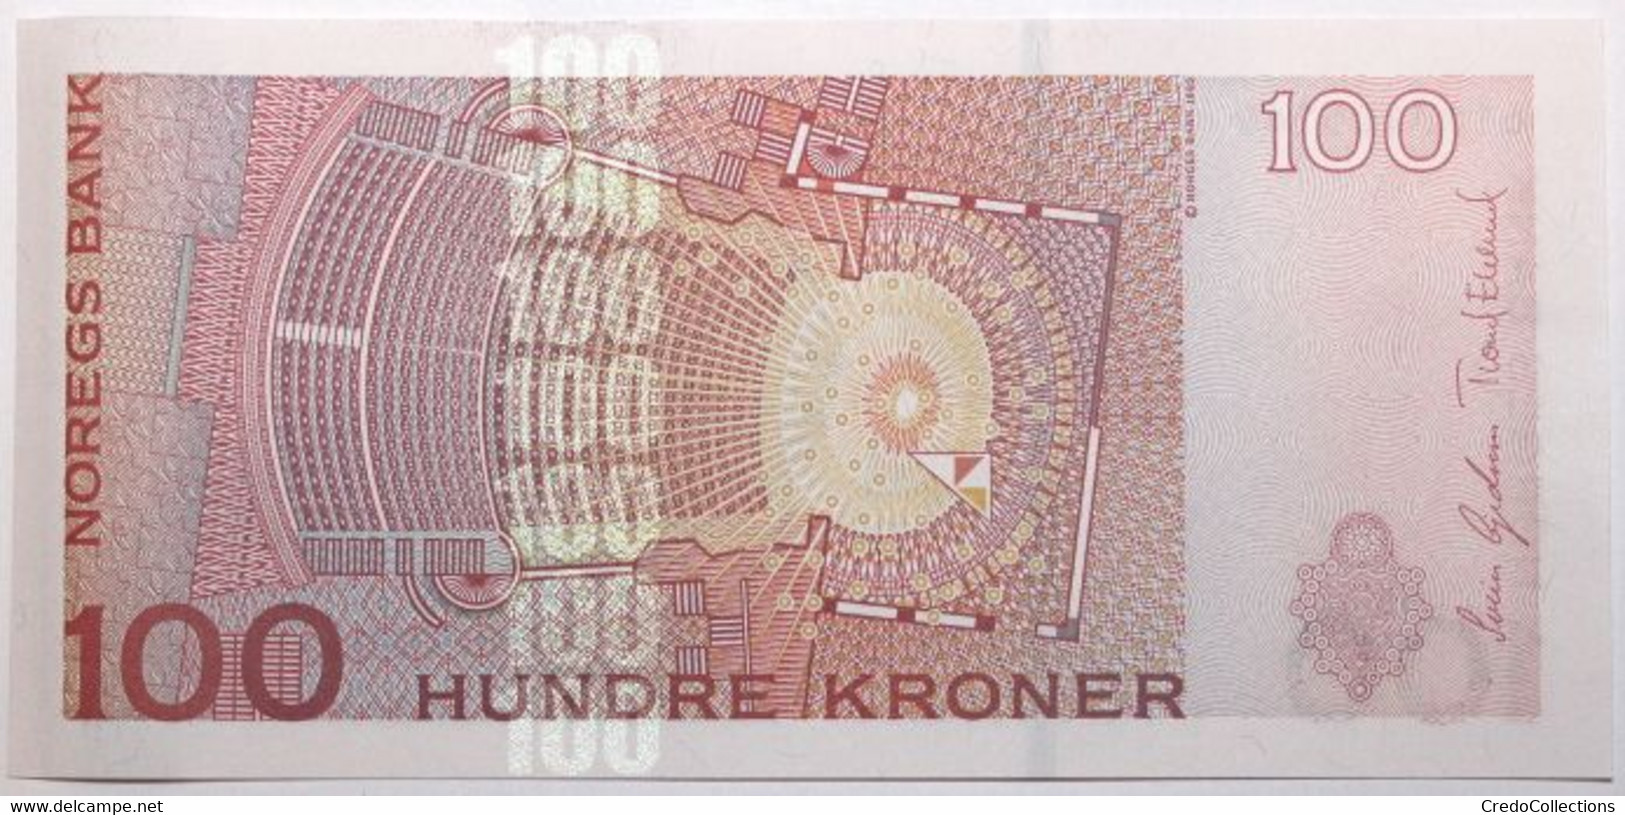 Norvège - 100 Kroner - 2006 - PICK 49c - NEUF - Norwegen